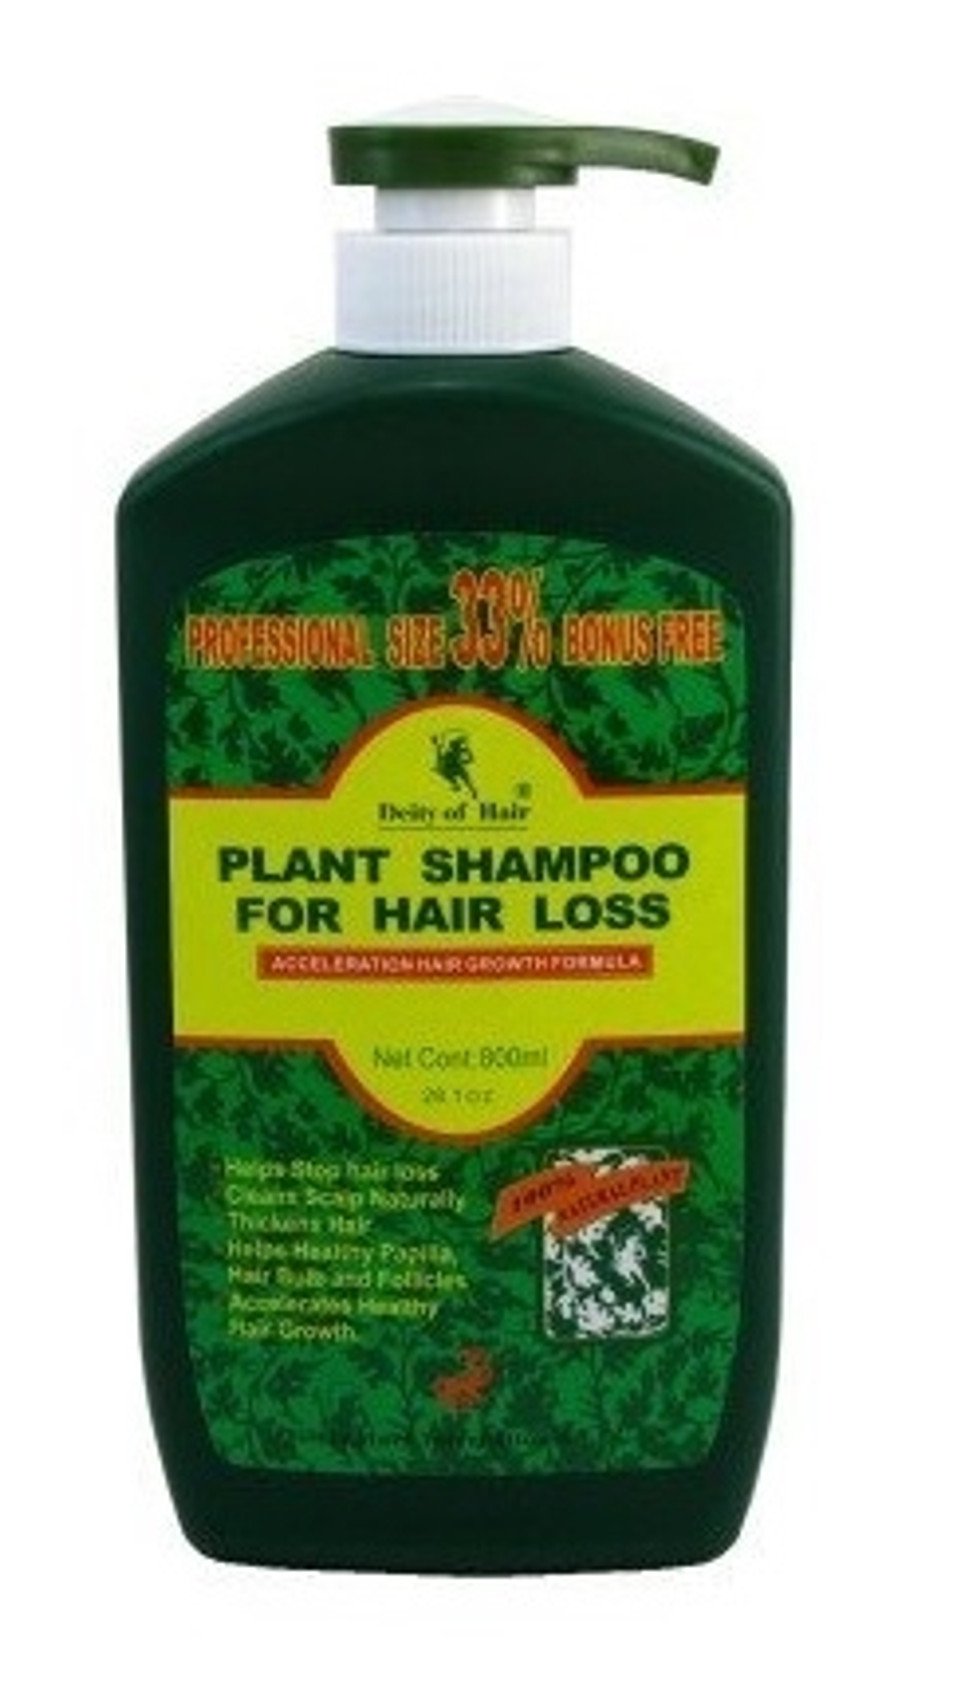  Plant Shampoo for Hair Loss 